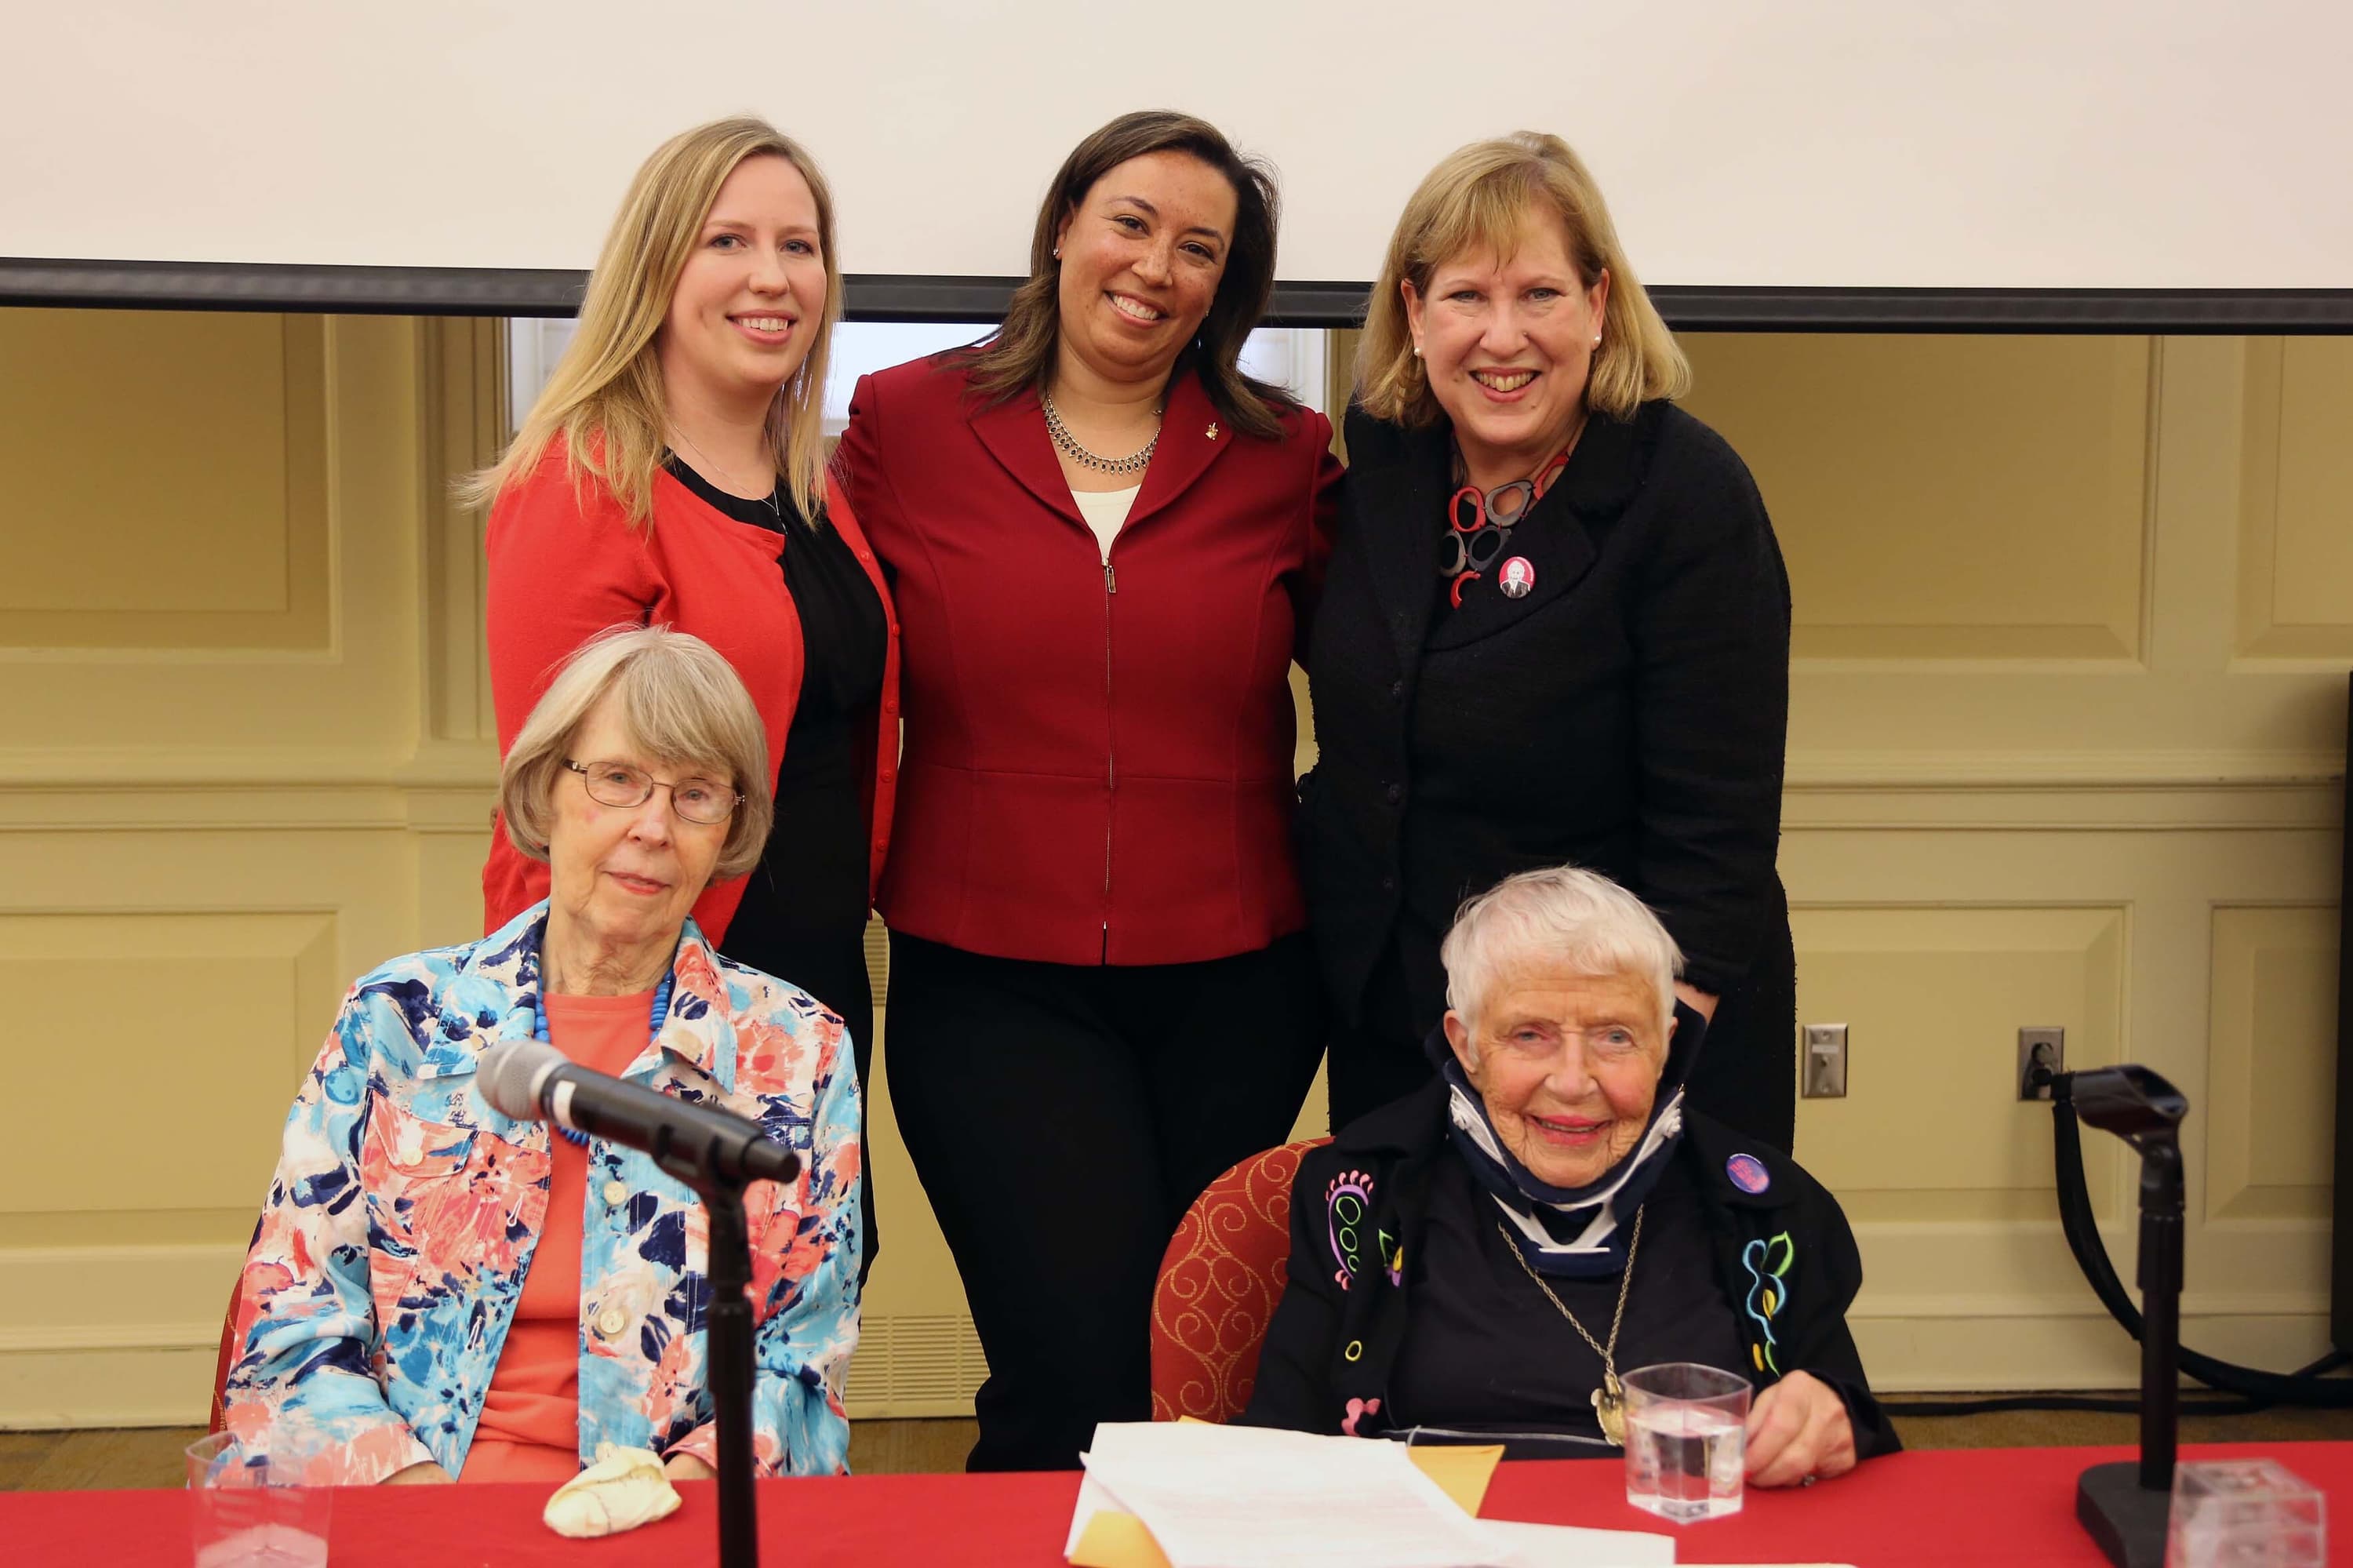 Panel participants: Sallie Holder '62, Sarah Niezelski '16, Nicole Pollard '91, Marsha Guenzler-Stevens, moderator, and Ellie Fields '49 for the 2017 celebration of women.